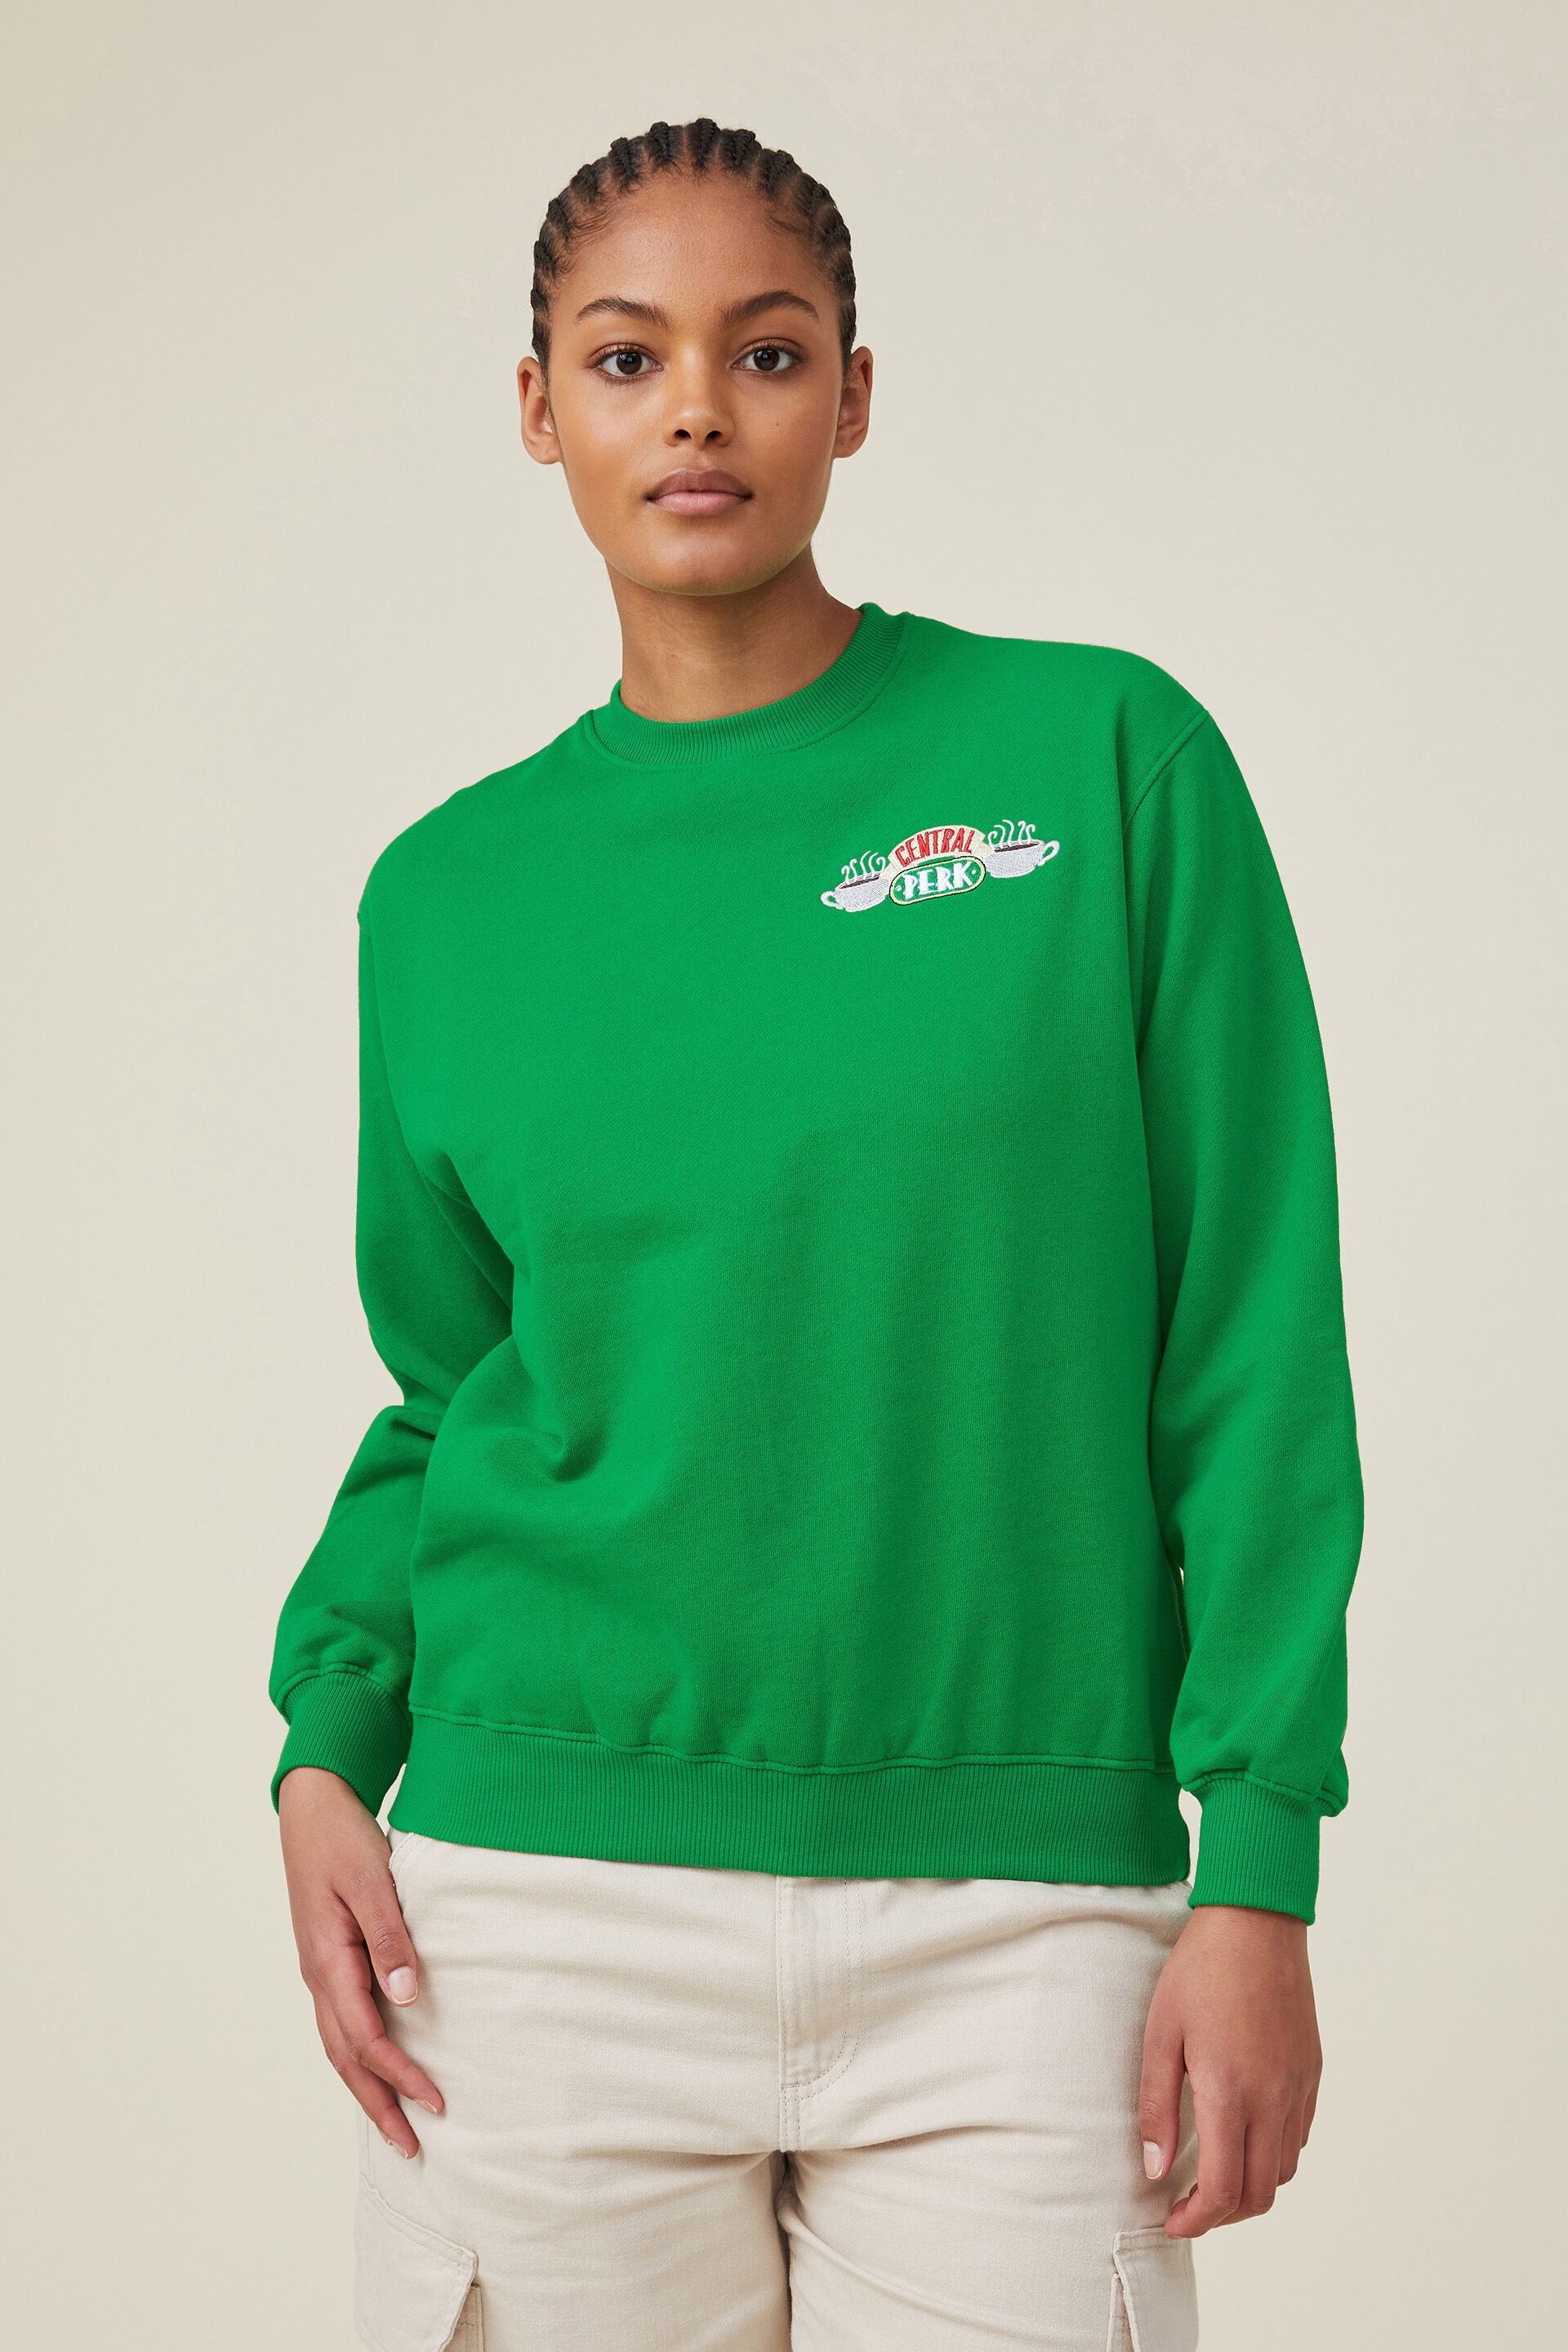 UP sweatshirt discount 68% Pink XXL WOMEN FASHION Jumpers & Sweatshirts Fleece 